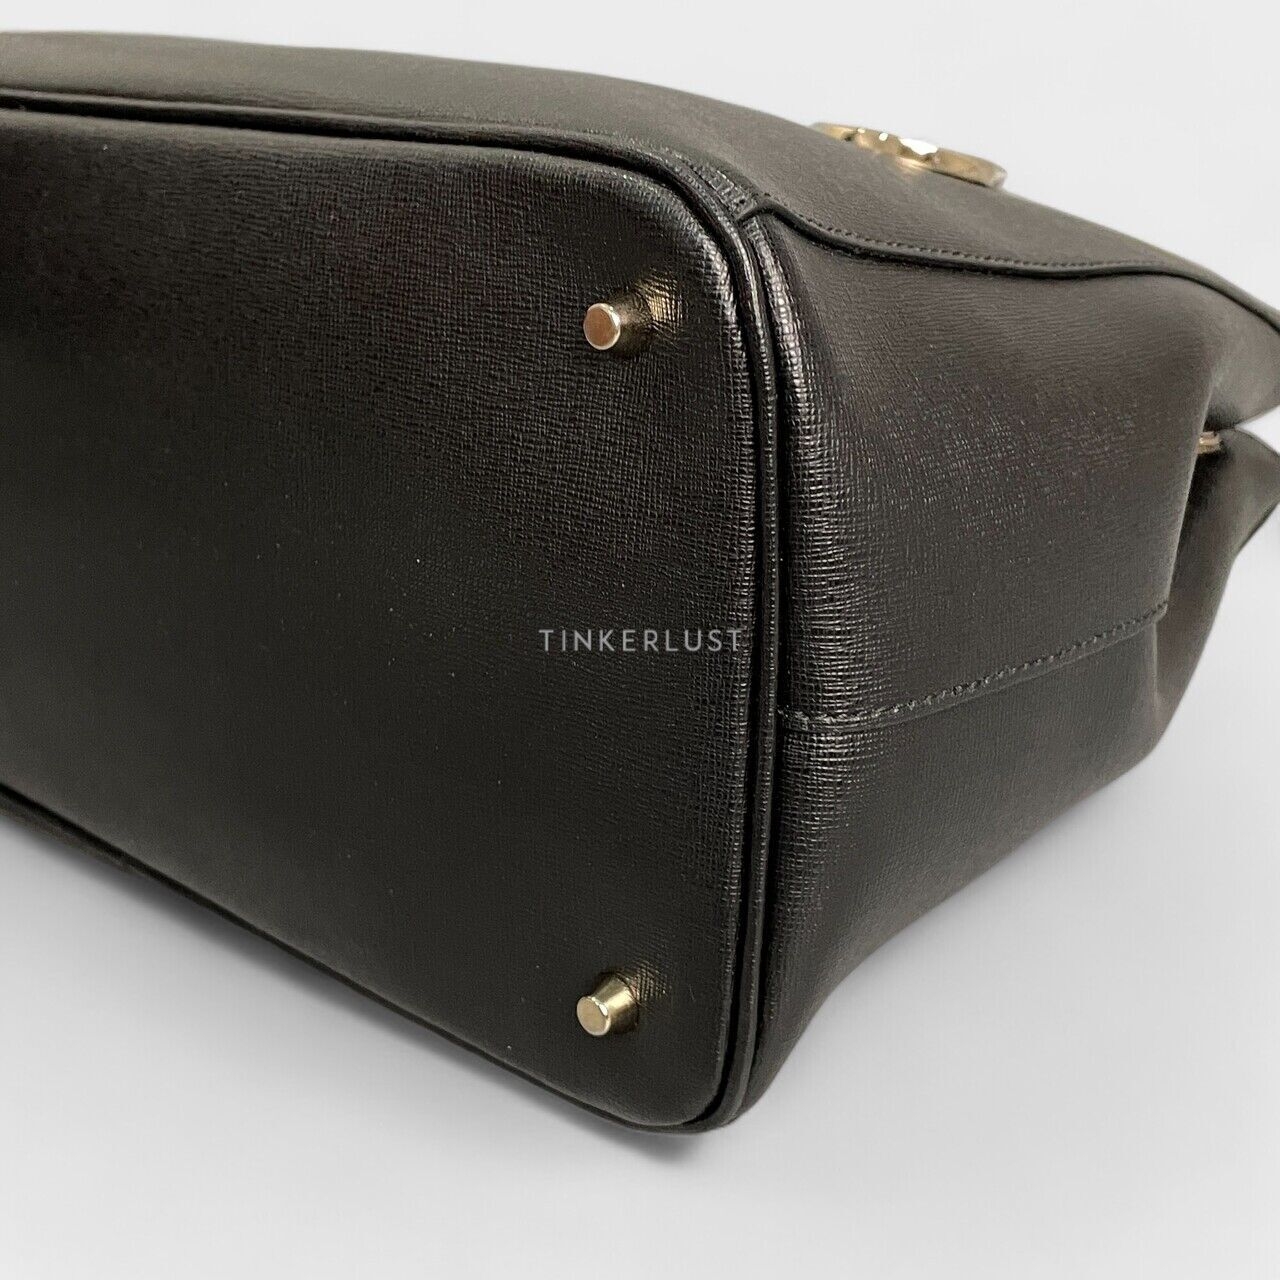 Furla Linda Carryall Double Zip Black Leather GHW Tote Bag